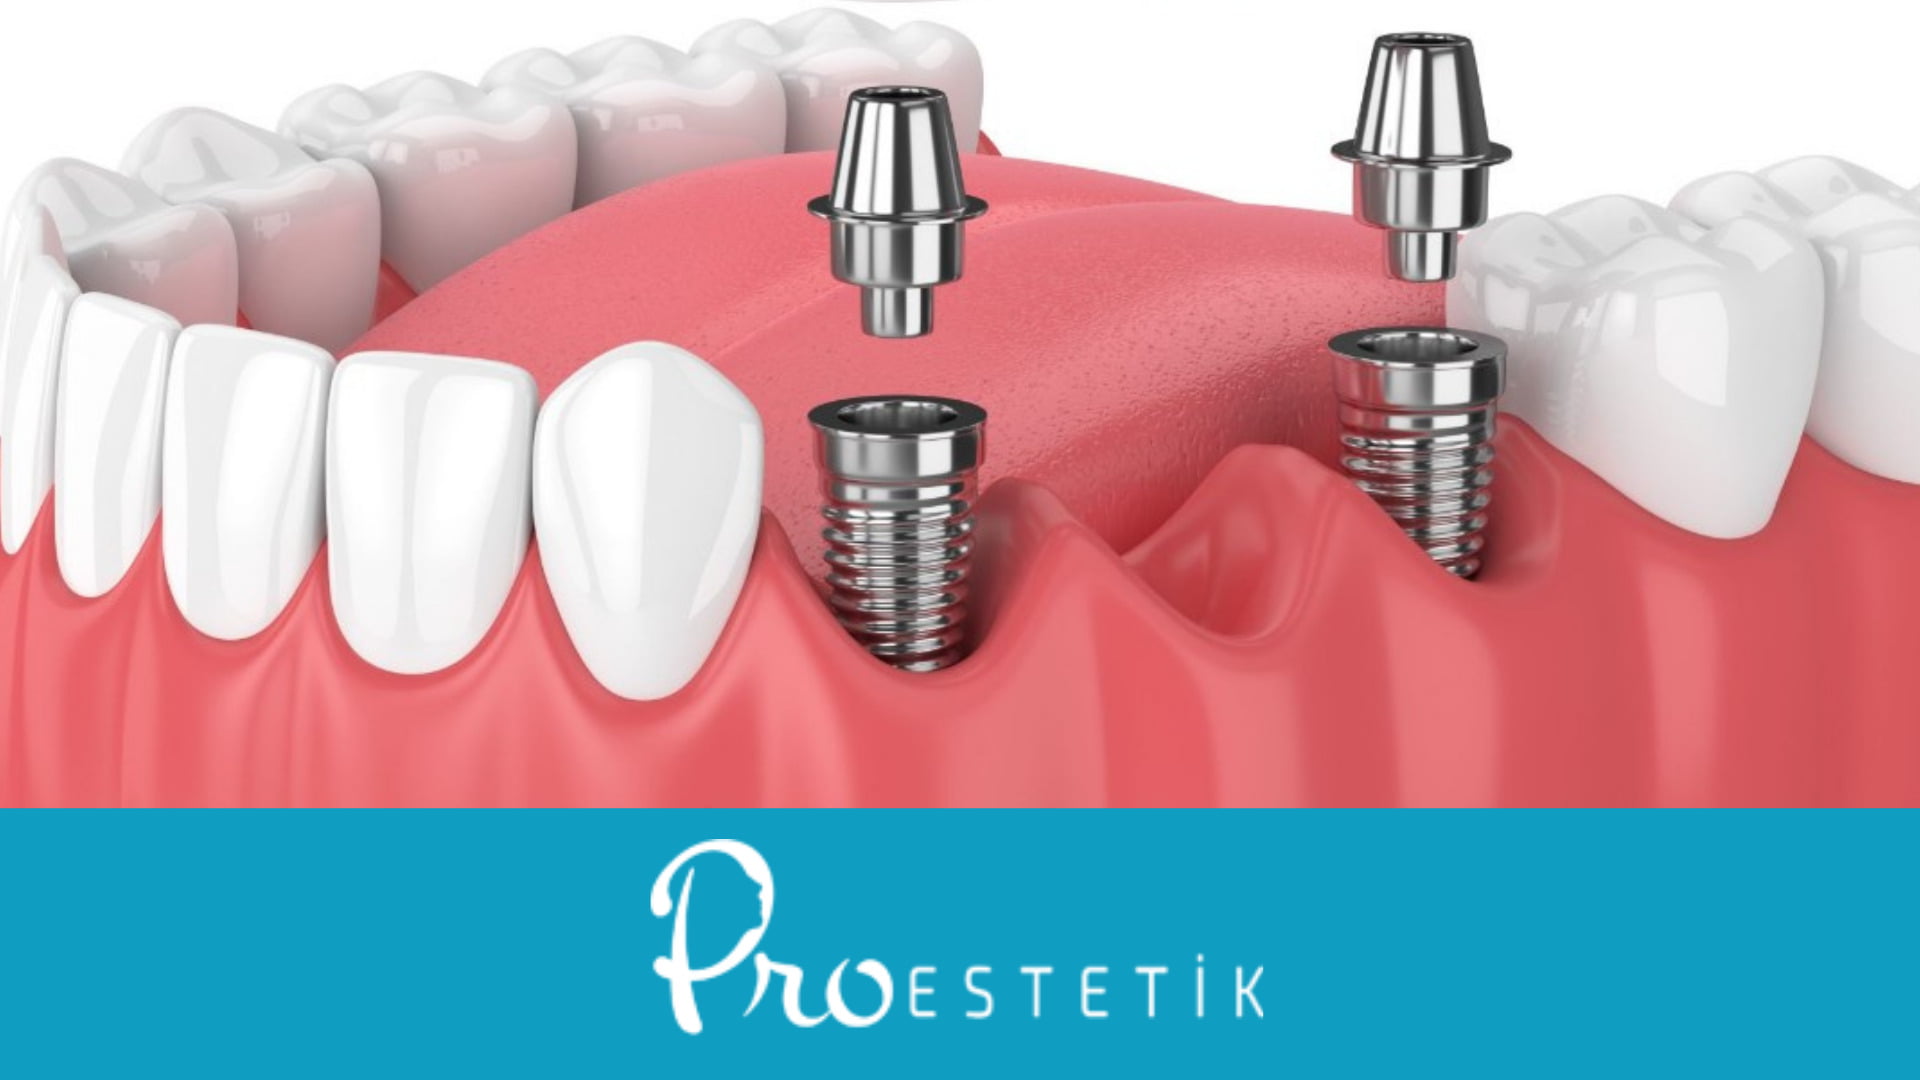 german dental implant brands